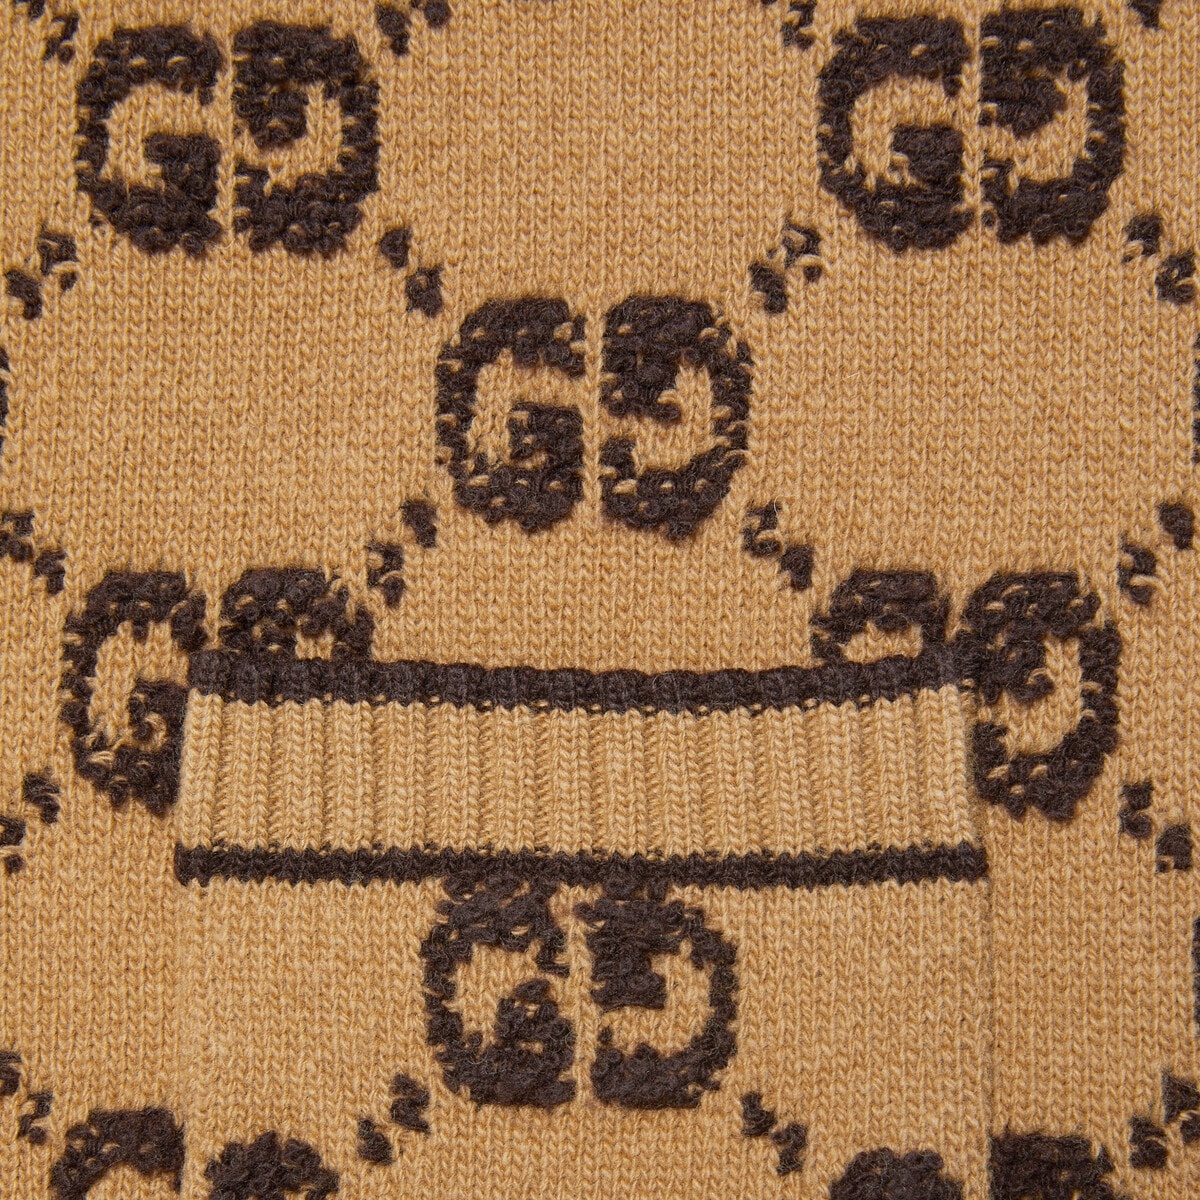 GG wool bouclé jacquard dress - 4